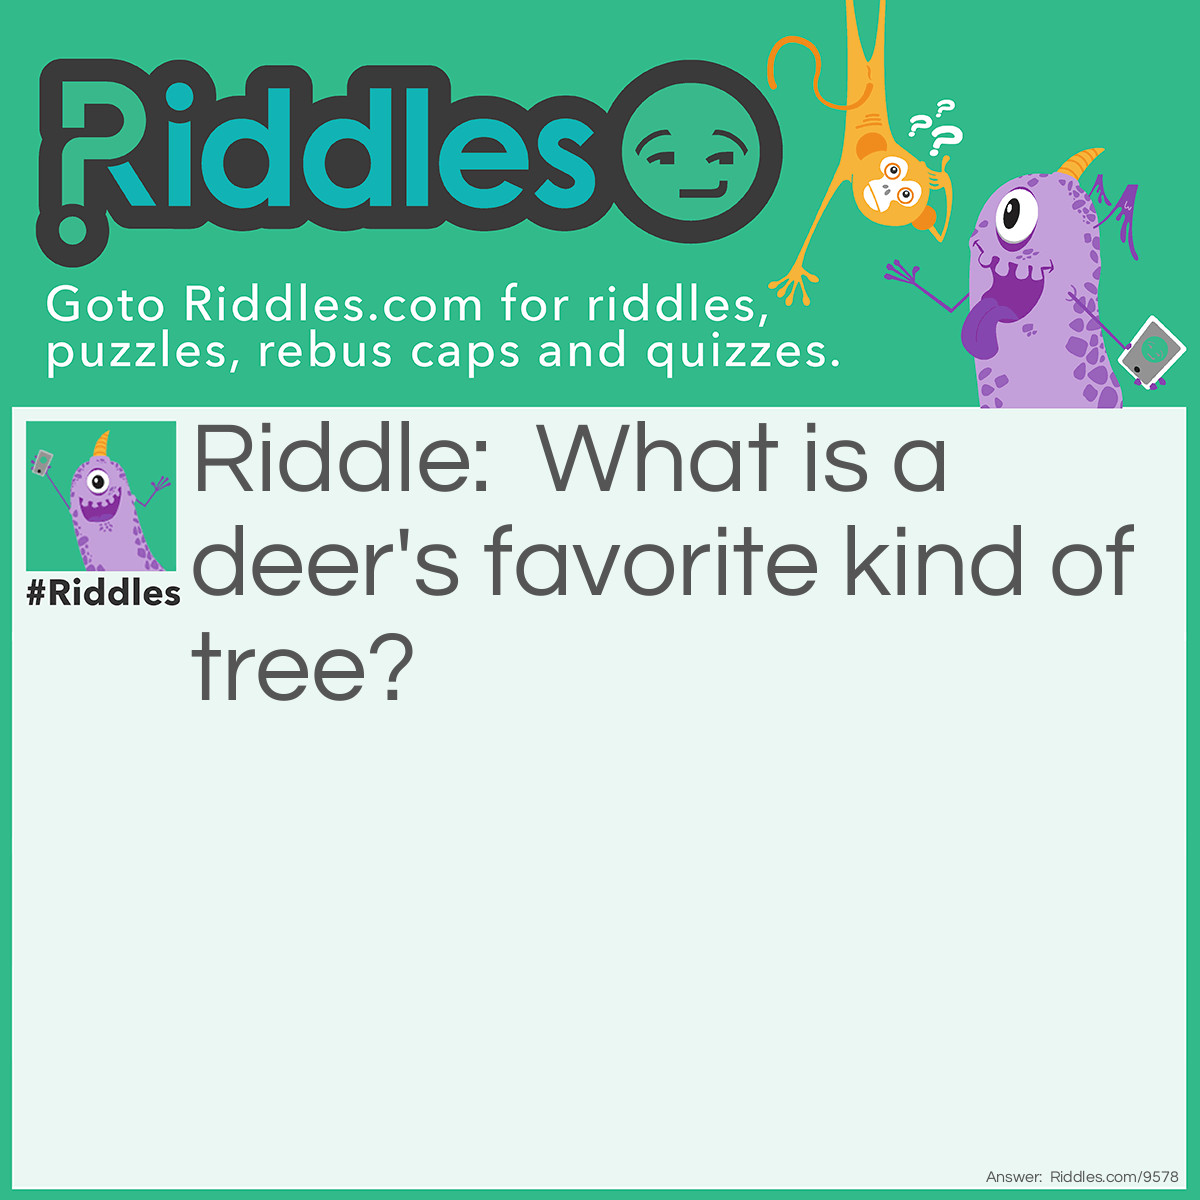 Riddle: What is a deer's favorite kind of tree? Answer: A El-deer tree!